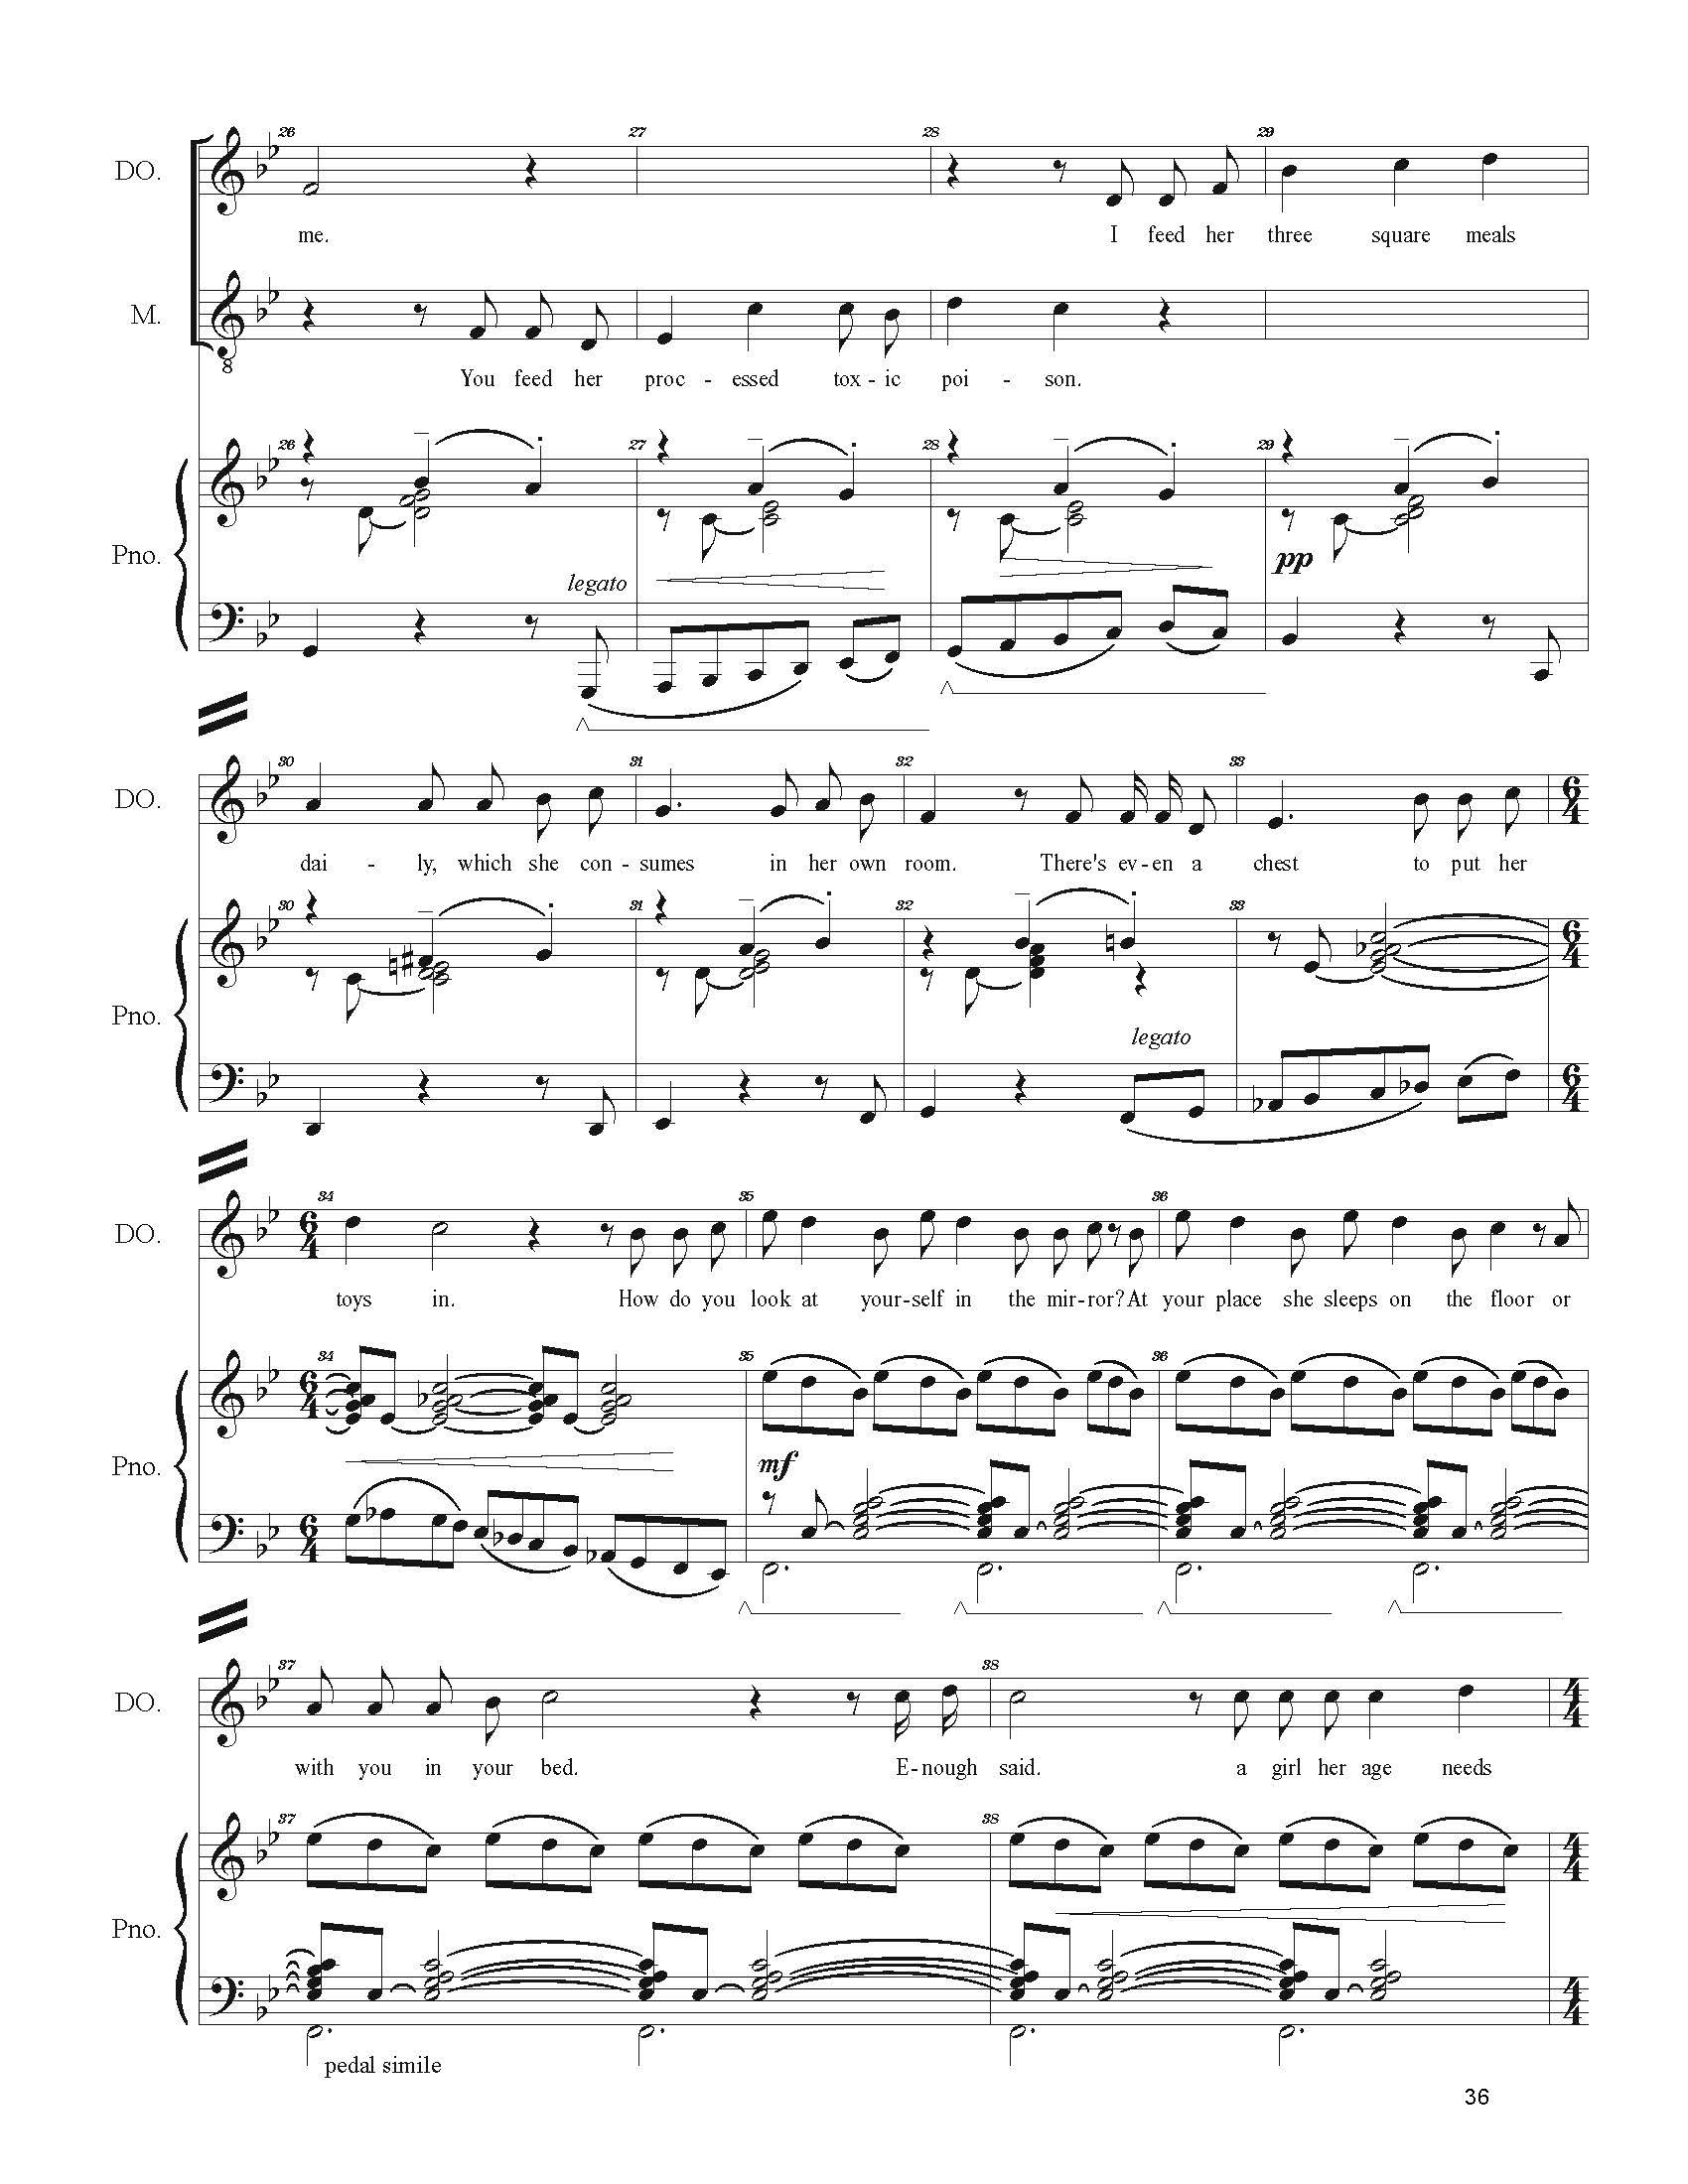 FULL PIANO VOCAL SCORE DRAFT 1 - Score_Page_036.jpg